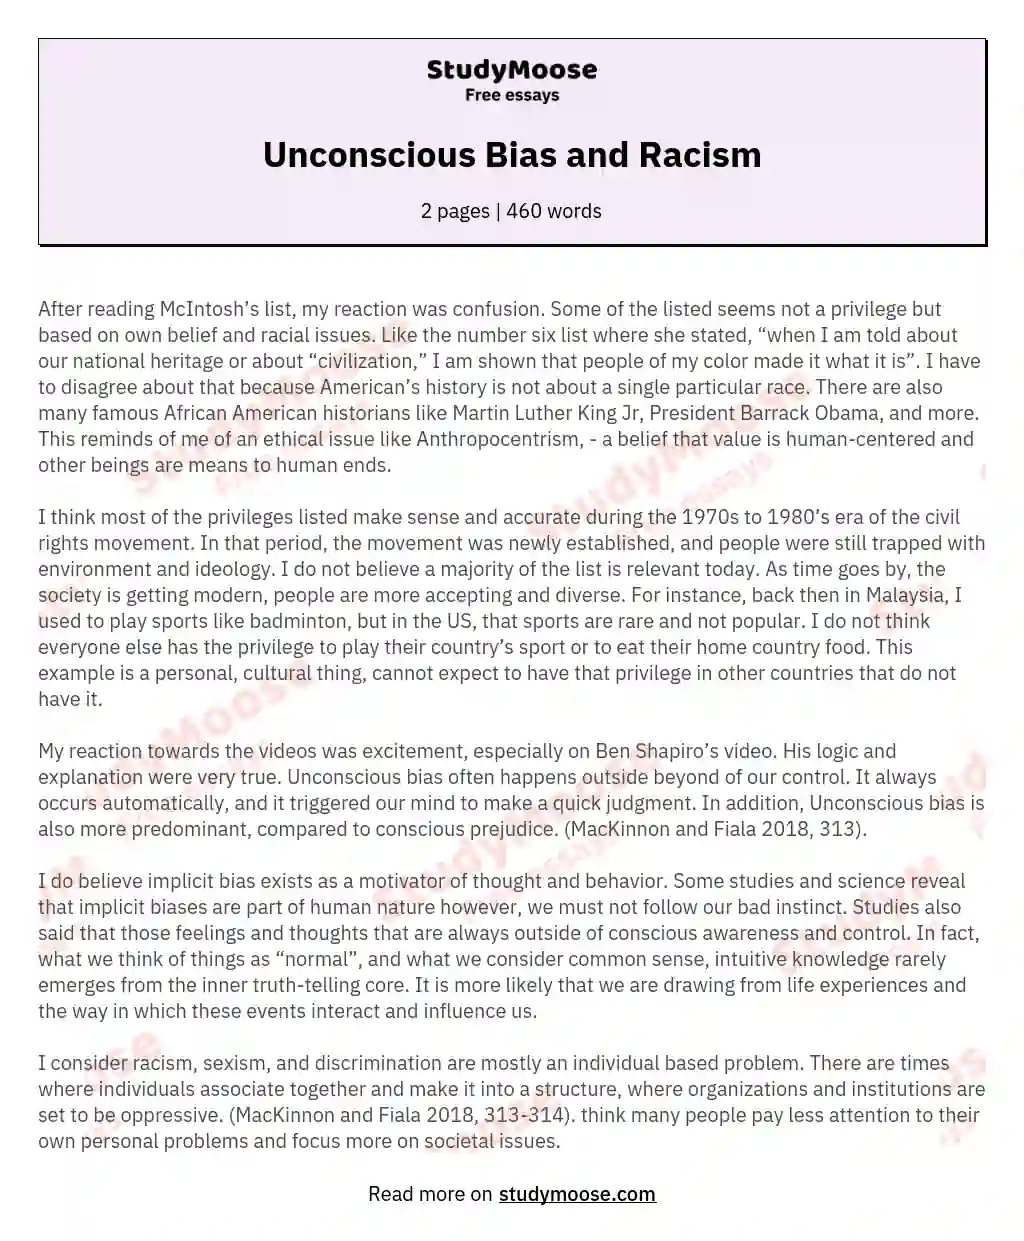 Unconscious Bias and Racism essay